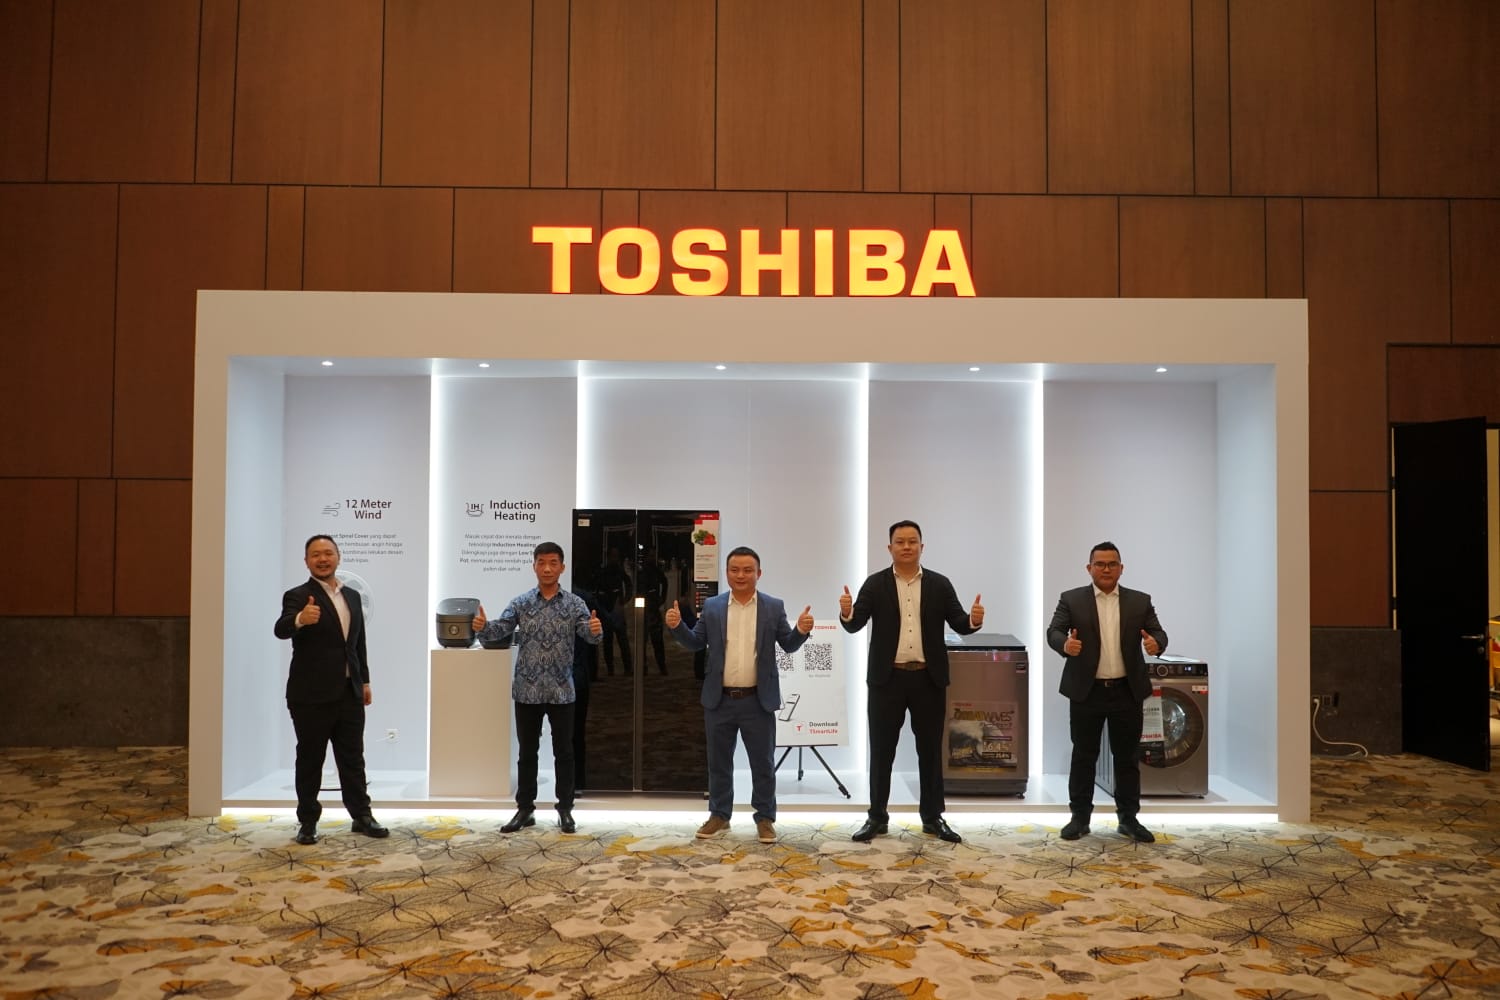 Toshiba Tawarkan Perangkat Elektronik Rumah Tangga Dengan Pengalaman Penggunaan Lebih Baik Bagi Gaya Hidup Modern